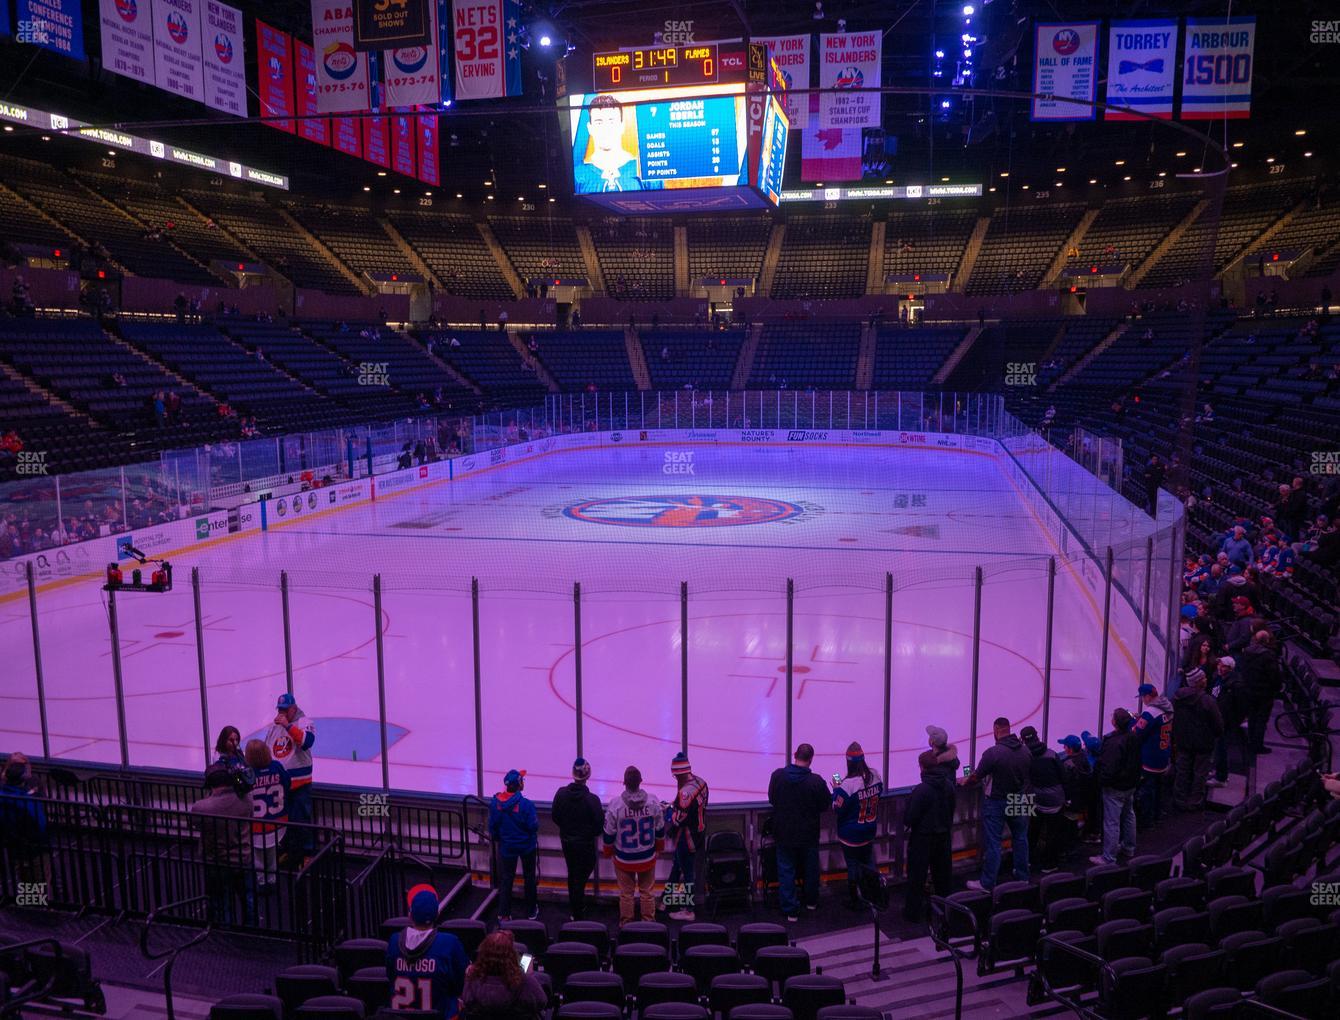 New York Islanders Nassau Coliseum Seating Chart